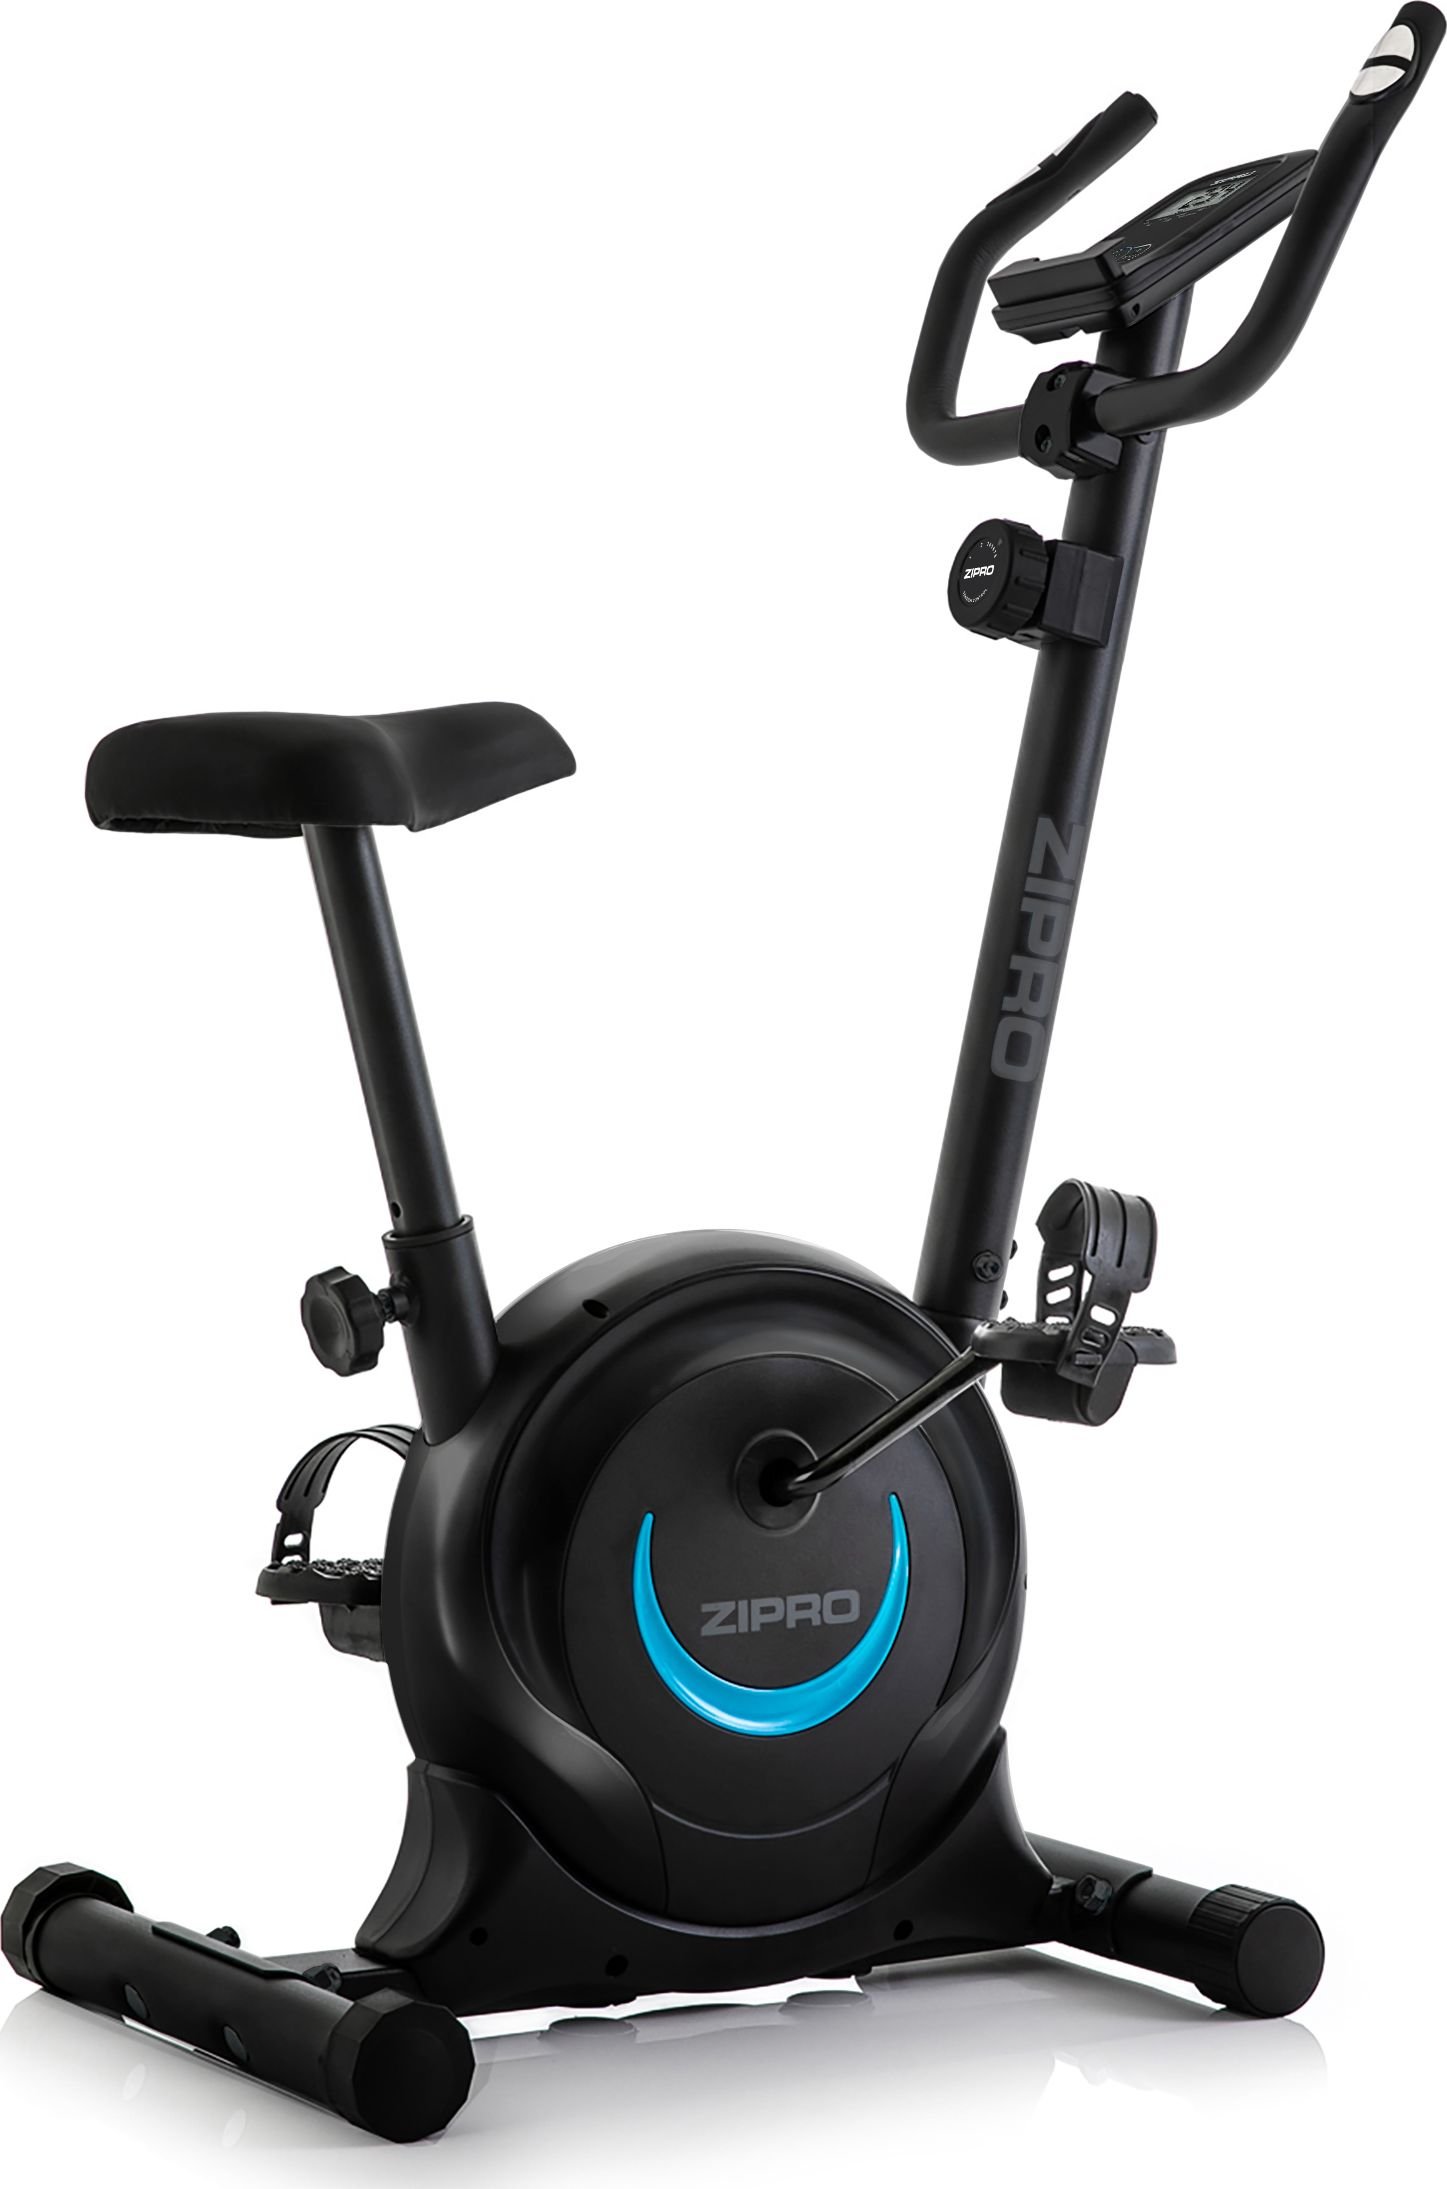 Biciclete fitness - Bicicleta pentru fitness Zipro One S, Volanta 8 kg, Greutate maxima utilizator 110 kg